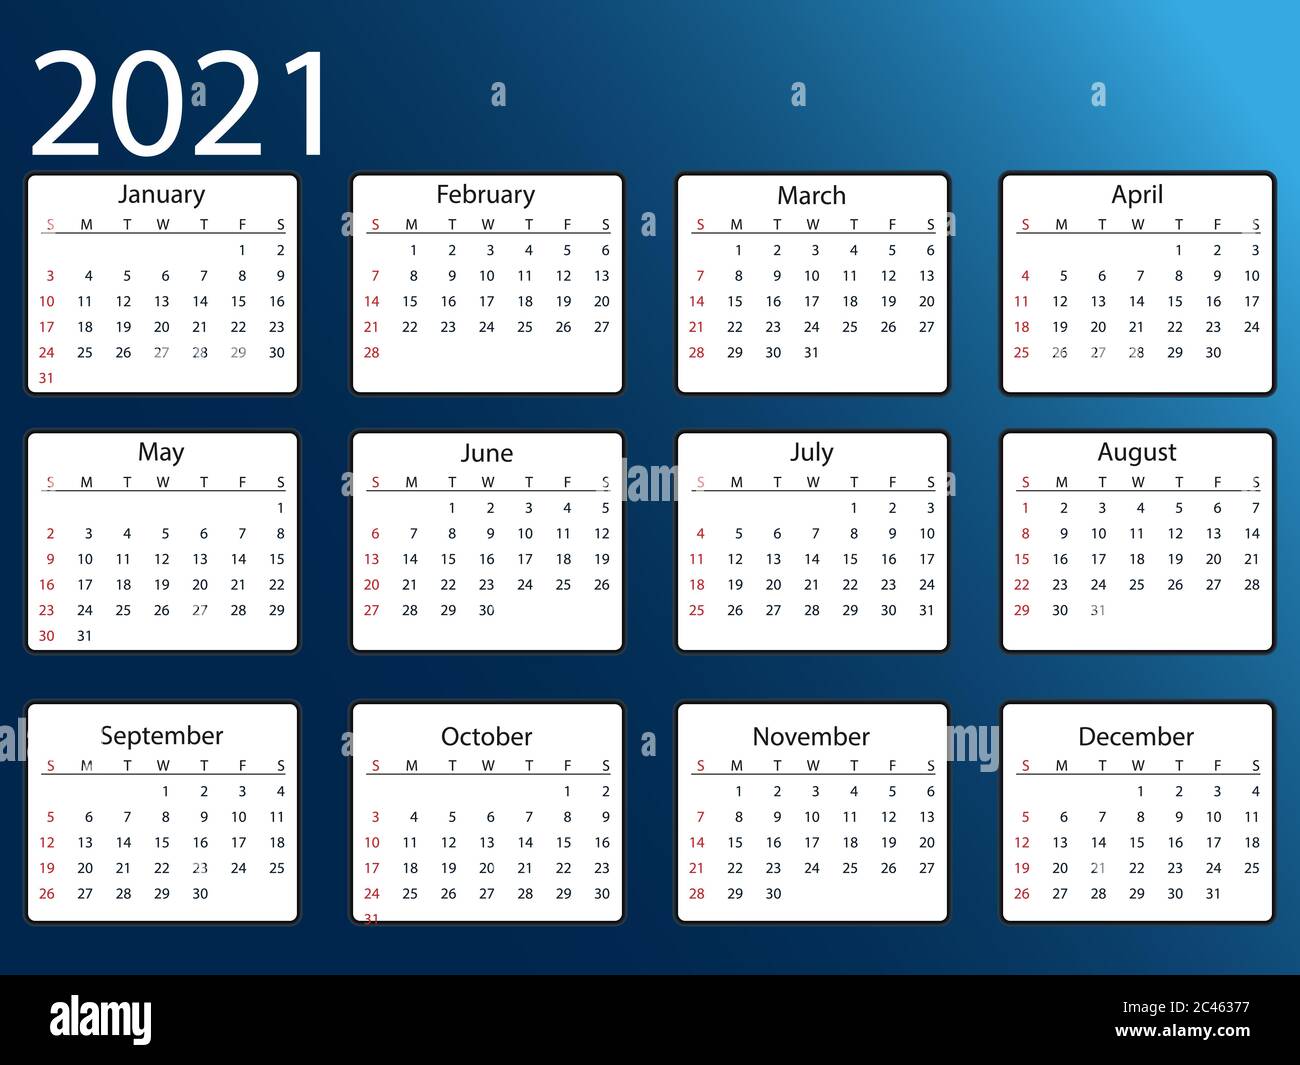 Calendario 2021 Por Numero De Semanas Para Imprimir Img Bahadur 